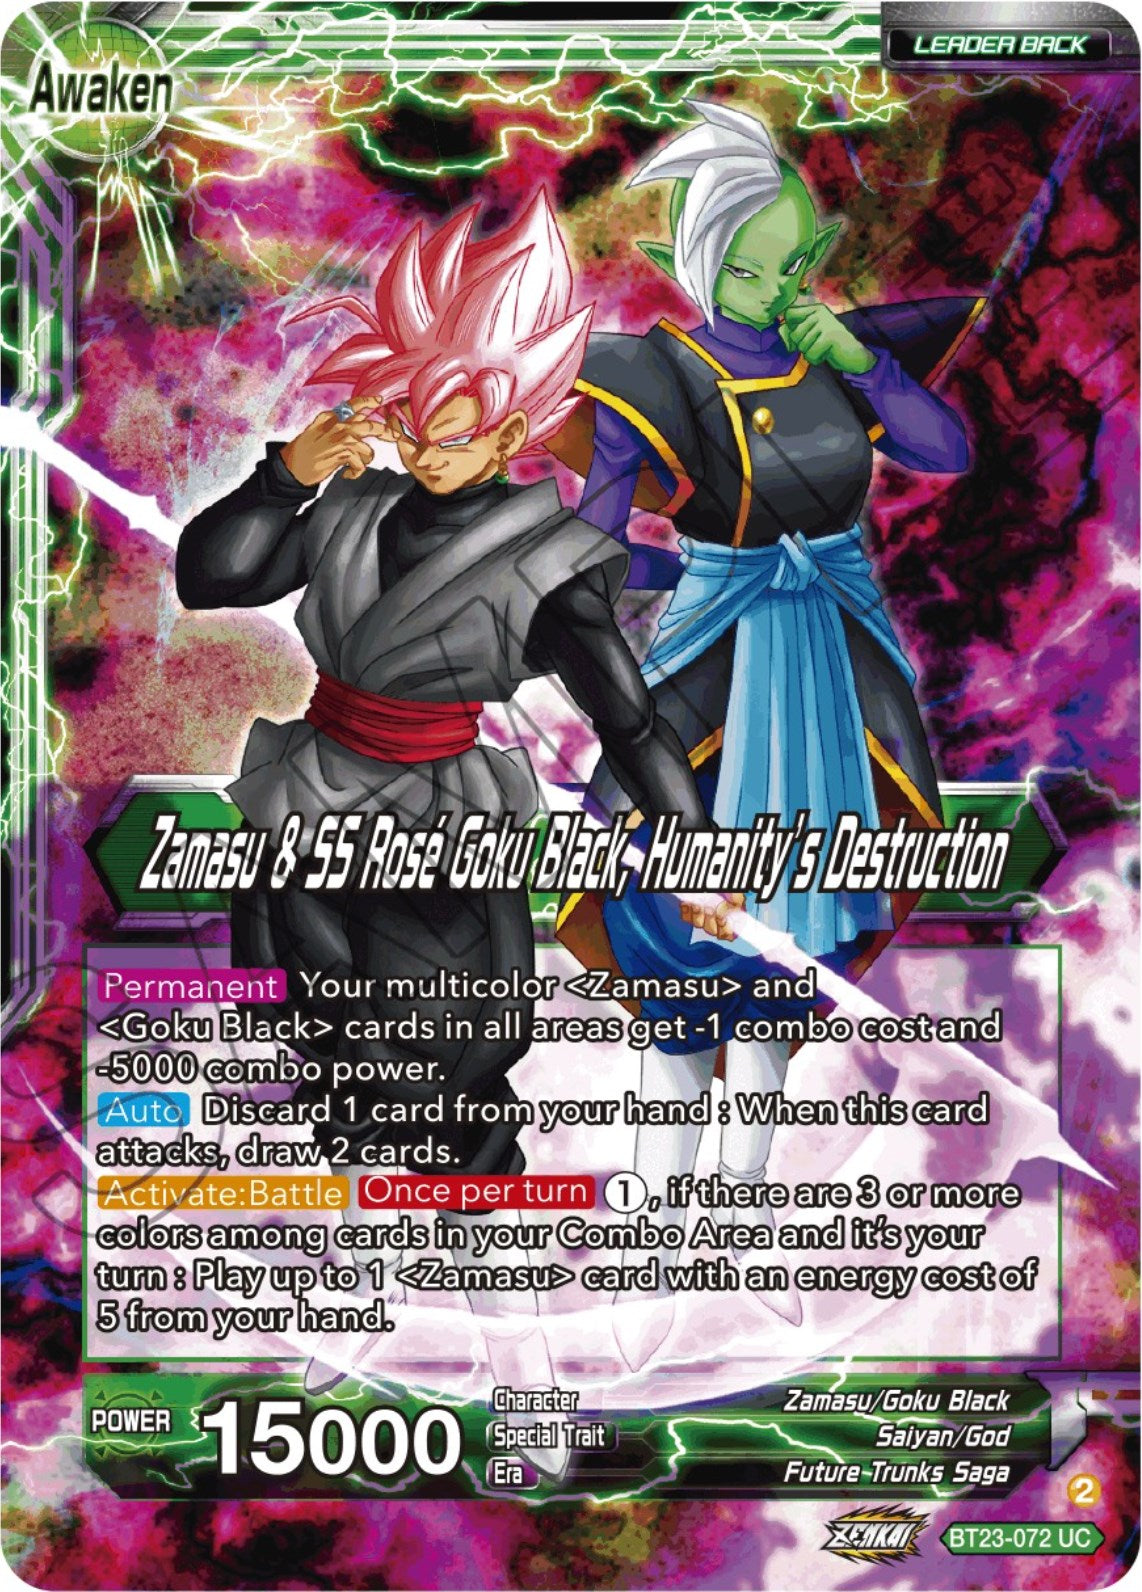 Zamasu & Goku Black // Zamasu & SS Rose Goku Black, Humanity's Destruction (BT23-072) [Perfect Combination] | Amazing Games TCG